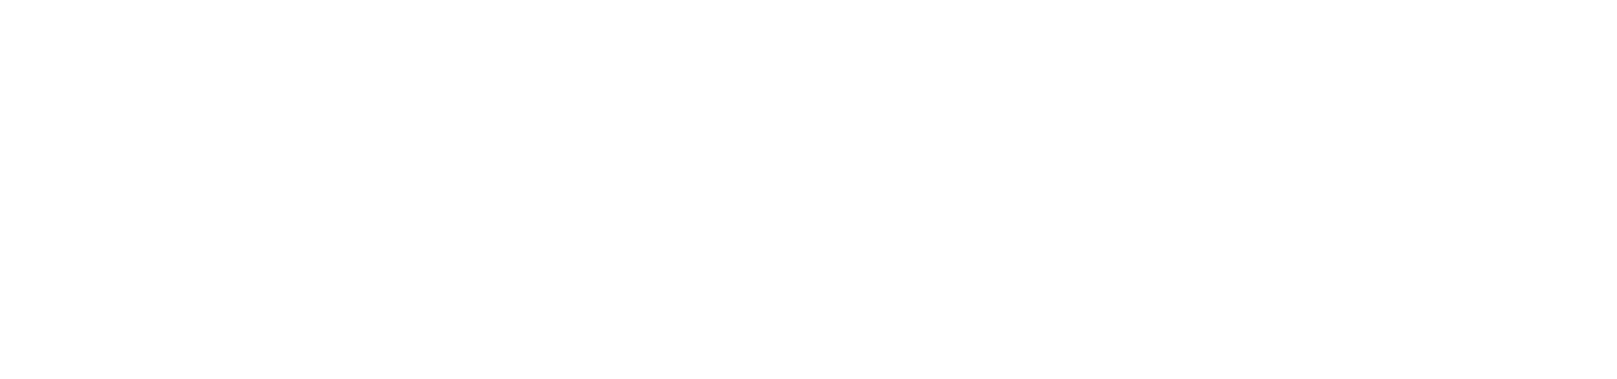 United Technologies Logo - Home - Natural Leader